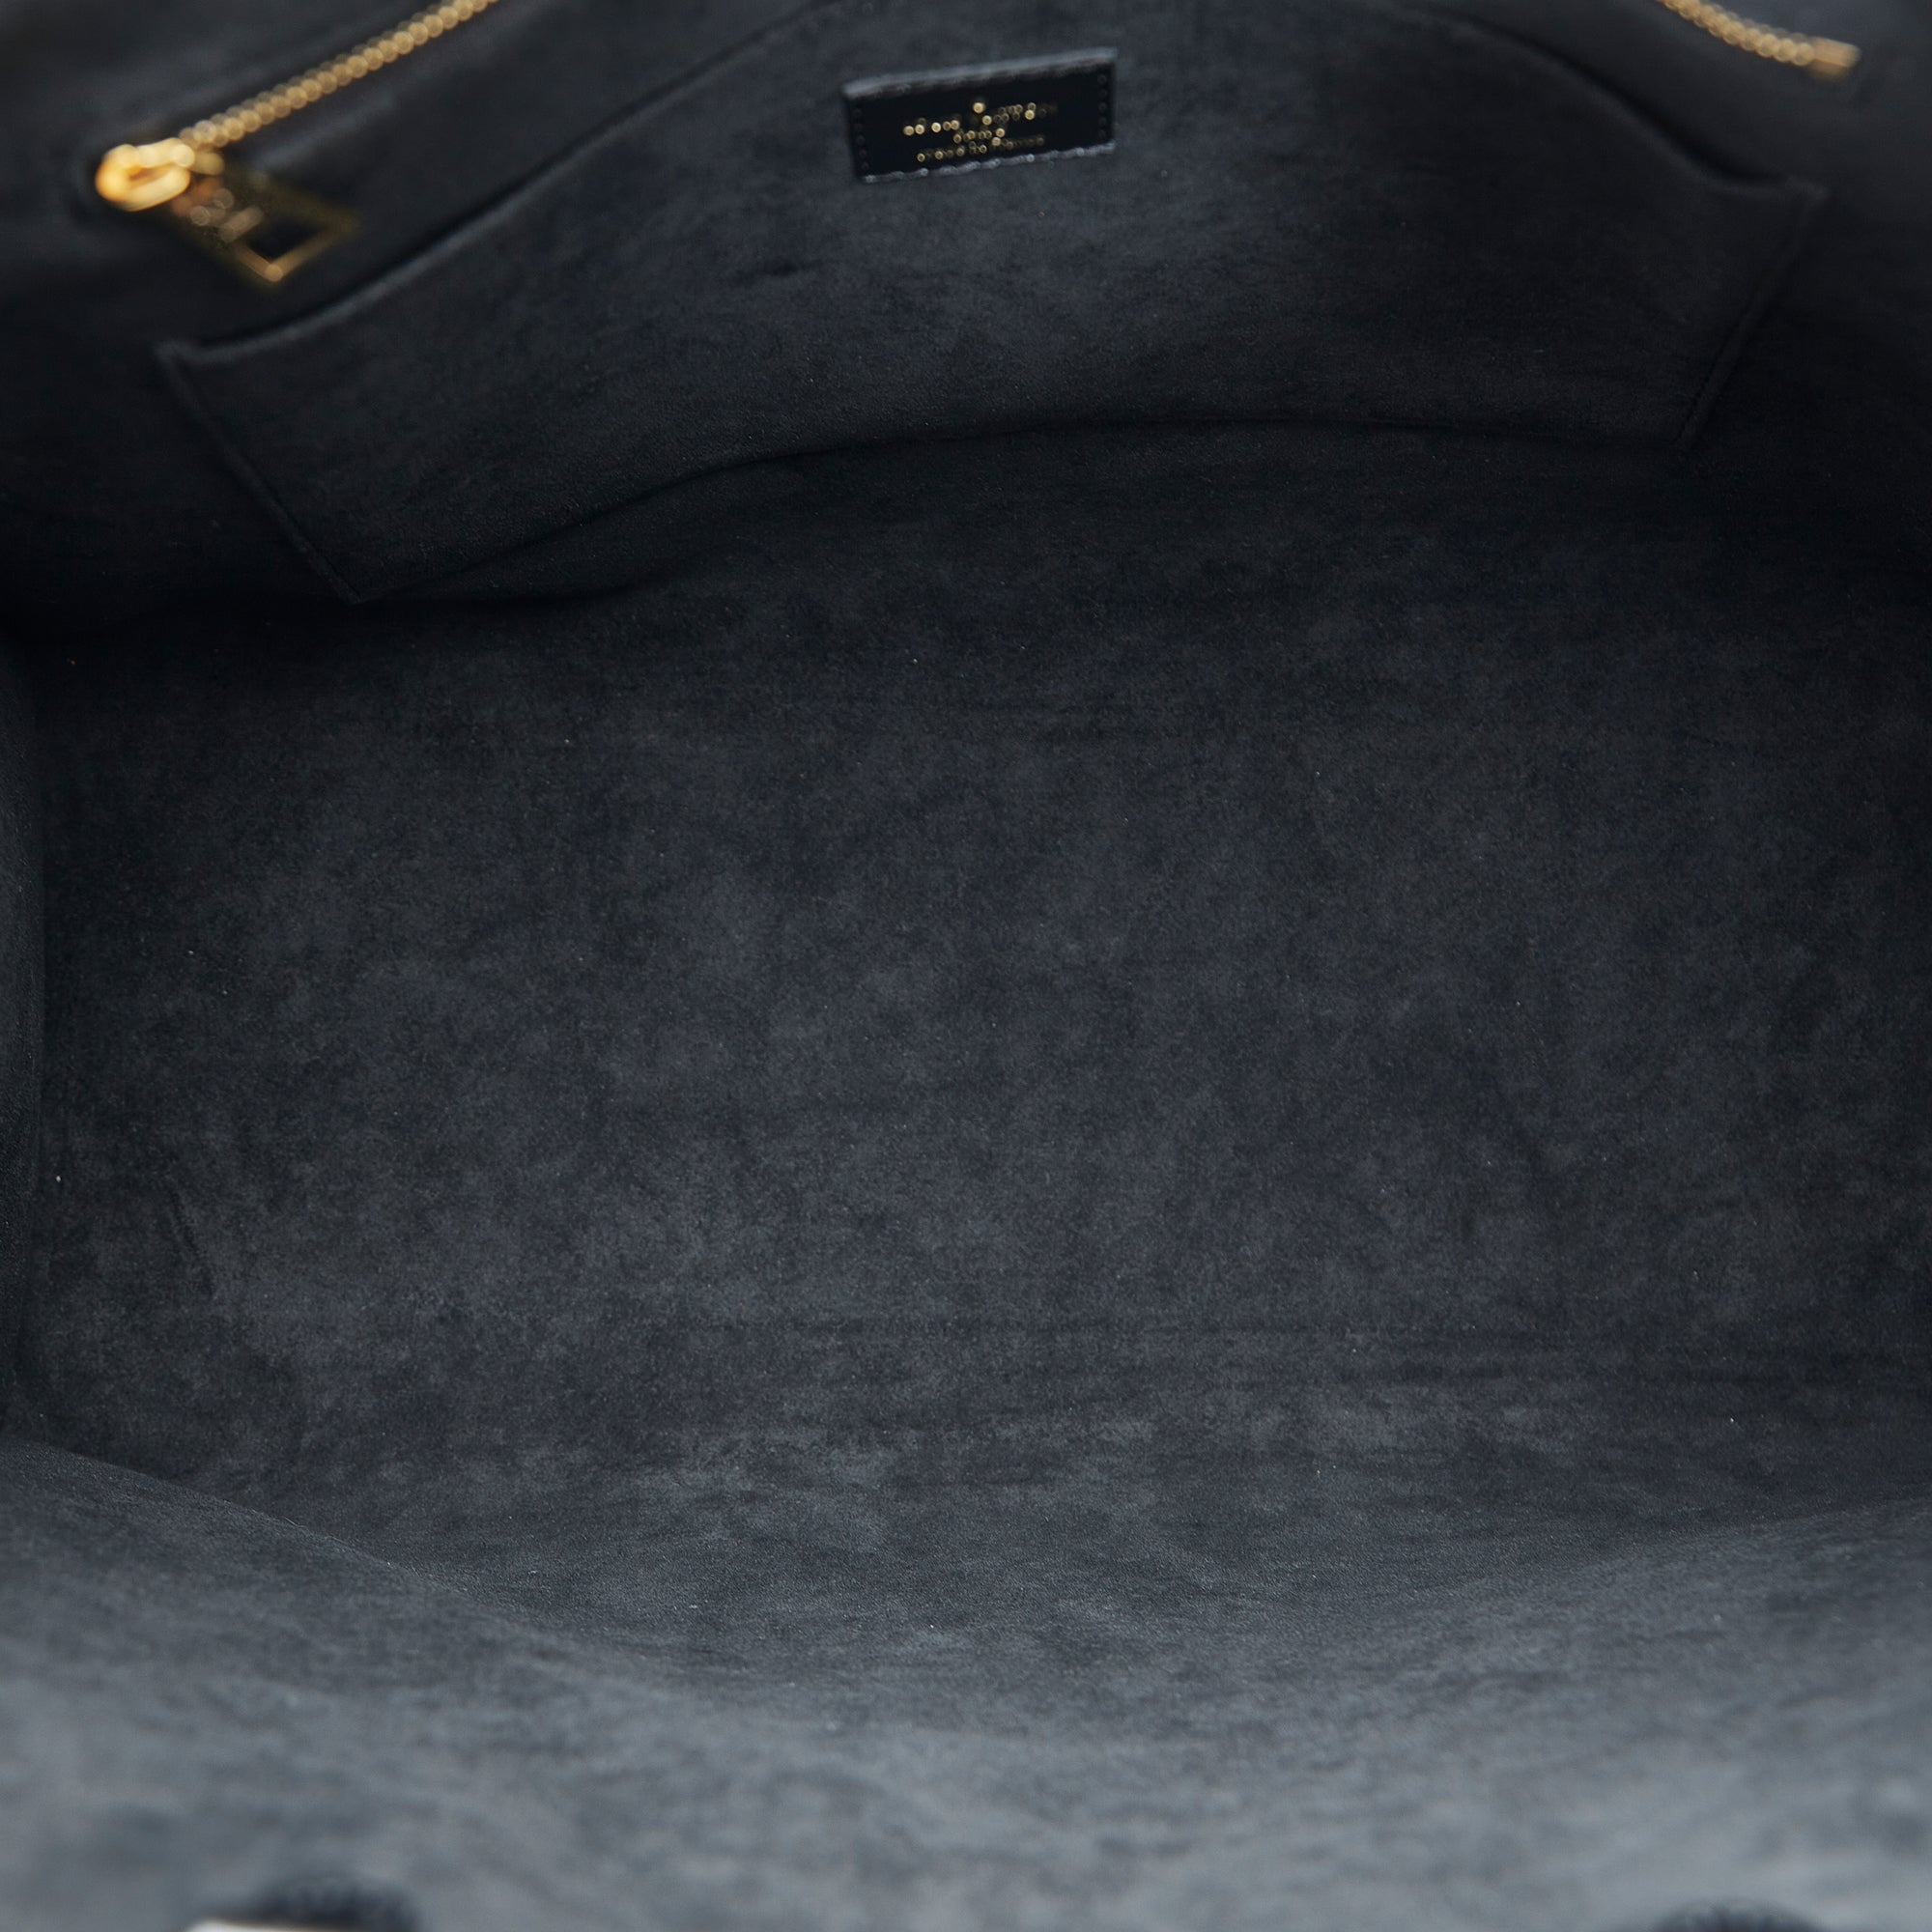 FWRD Renew Louis Vuitton 1854 Onthego GM Bag in Black & White